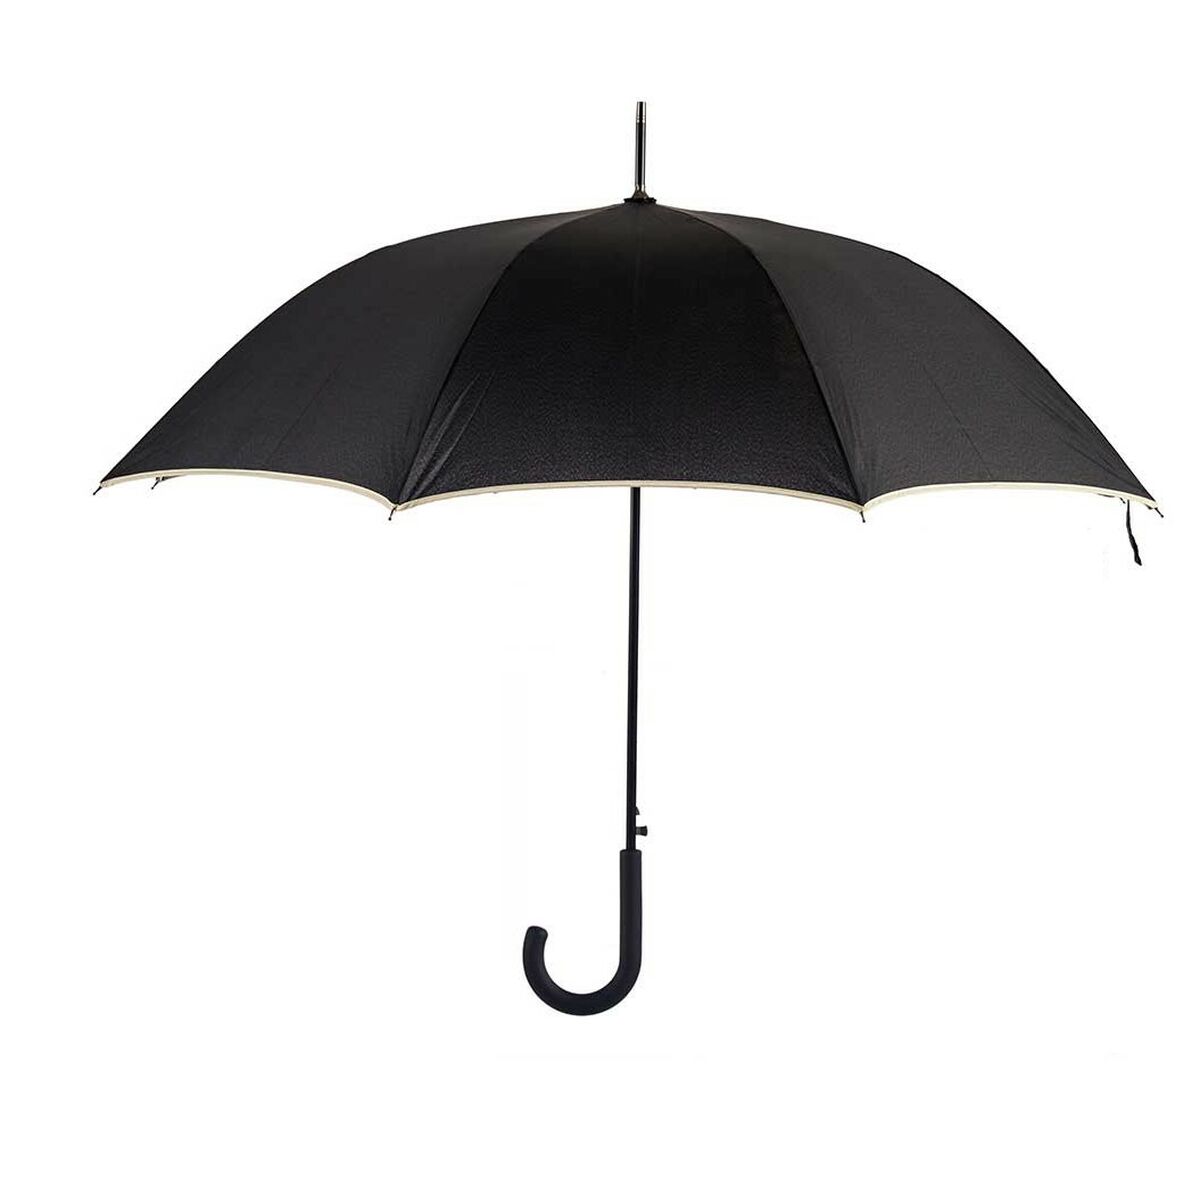 Paraplu Zwart Crème Metaal Vezel 95 x 95 x 86 cm (12 Stuks)